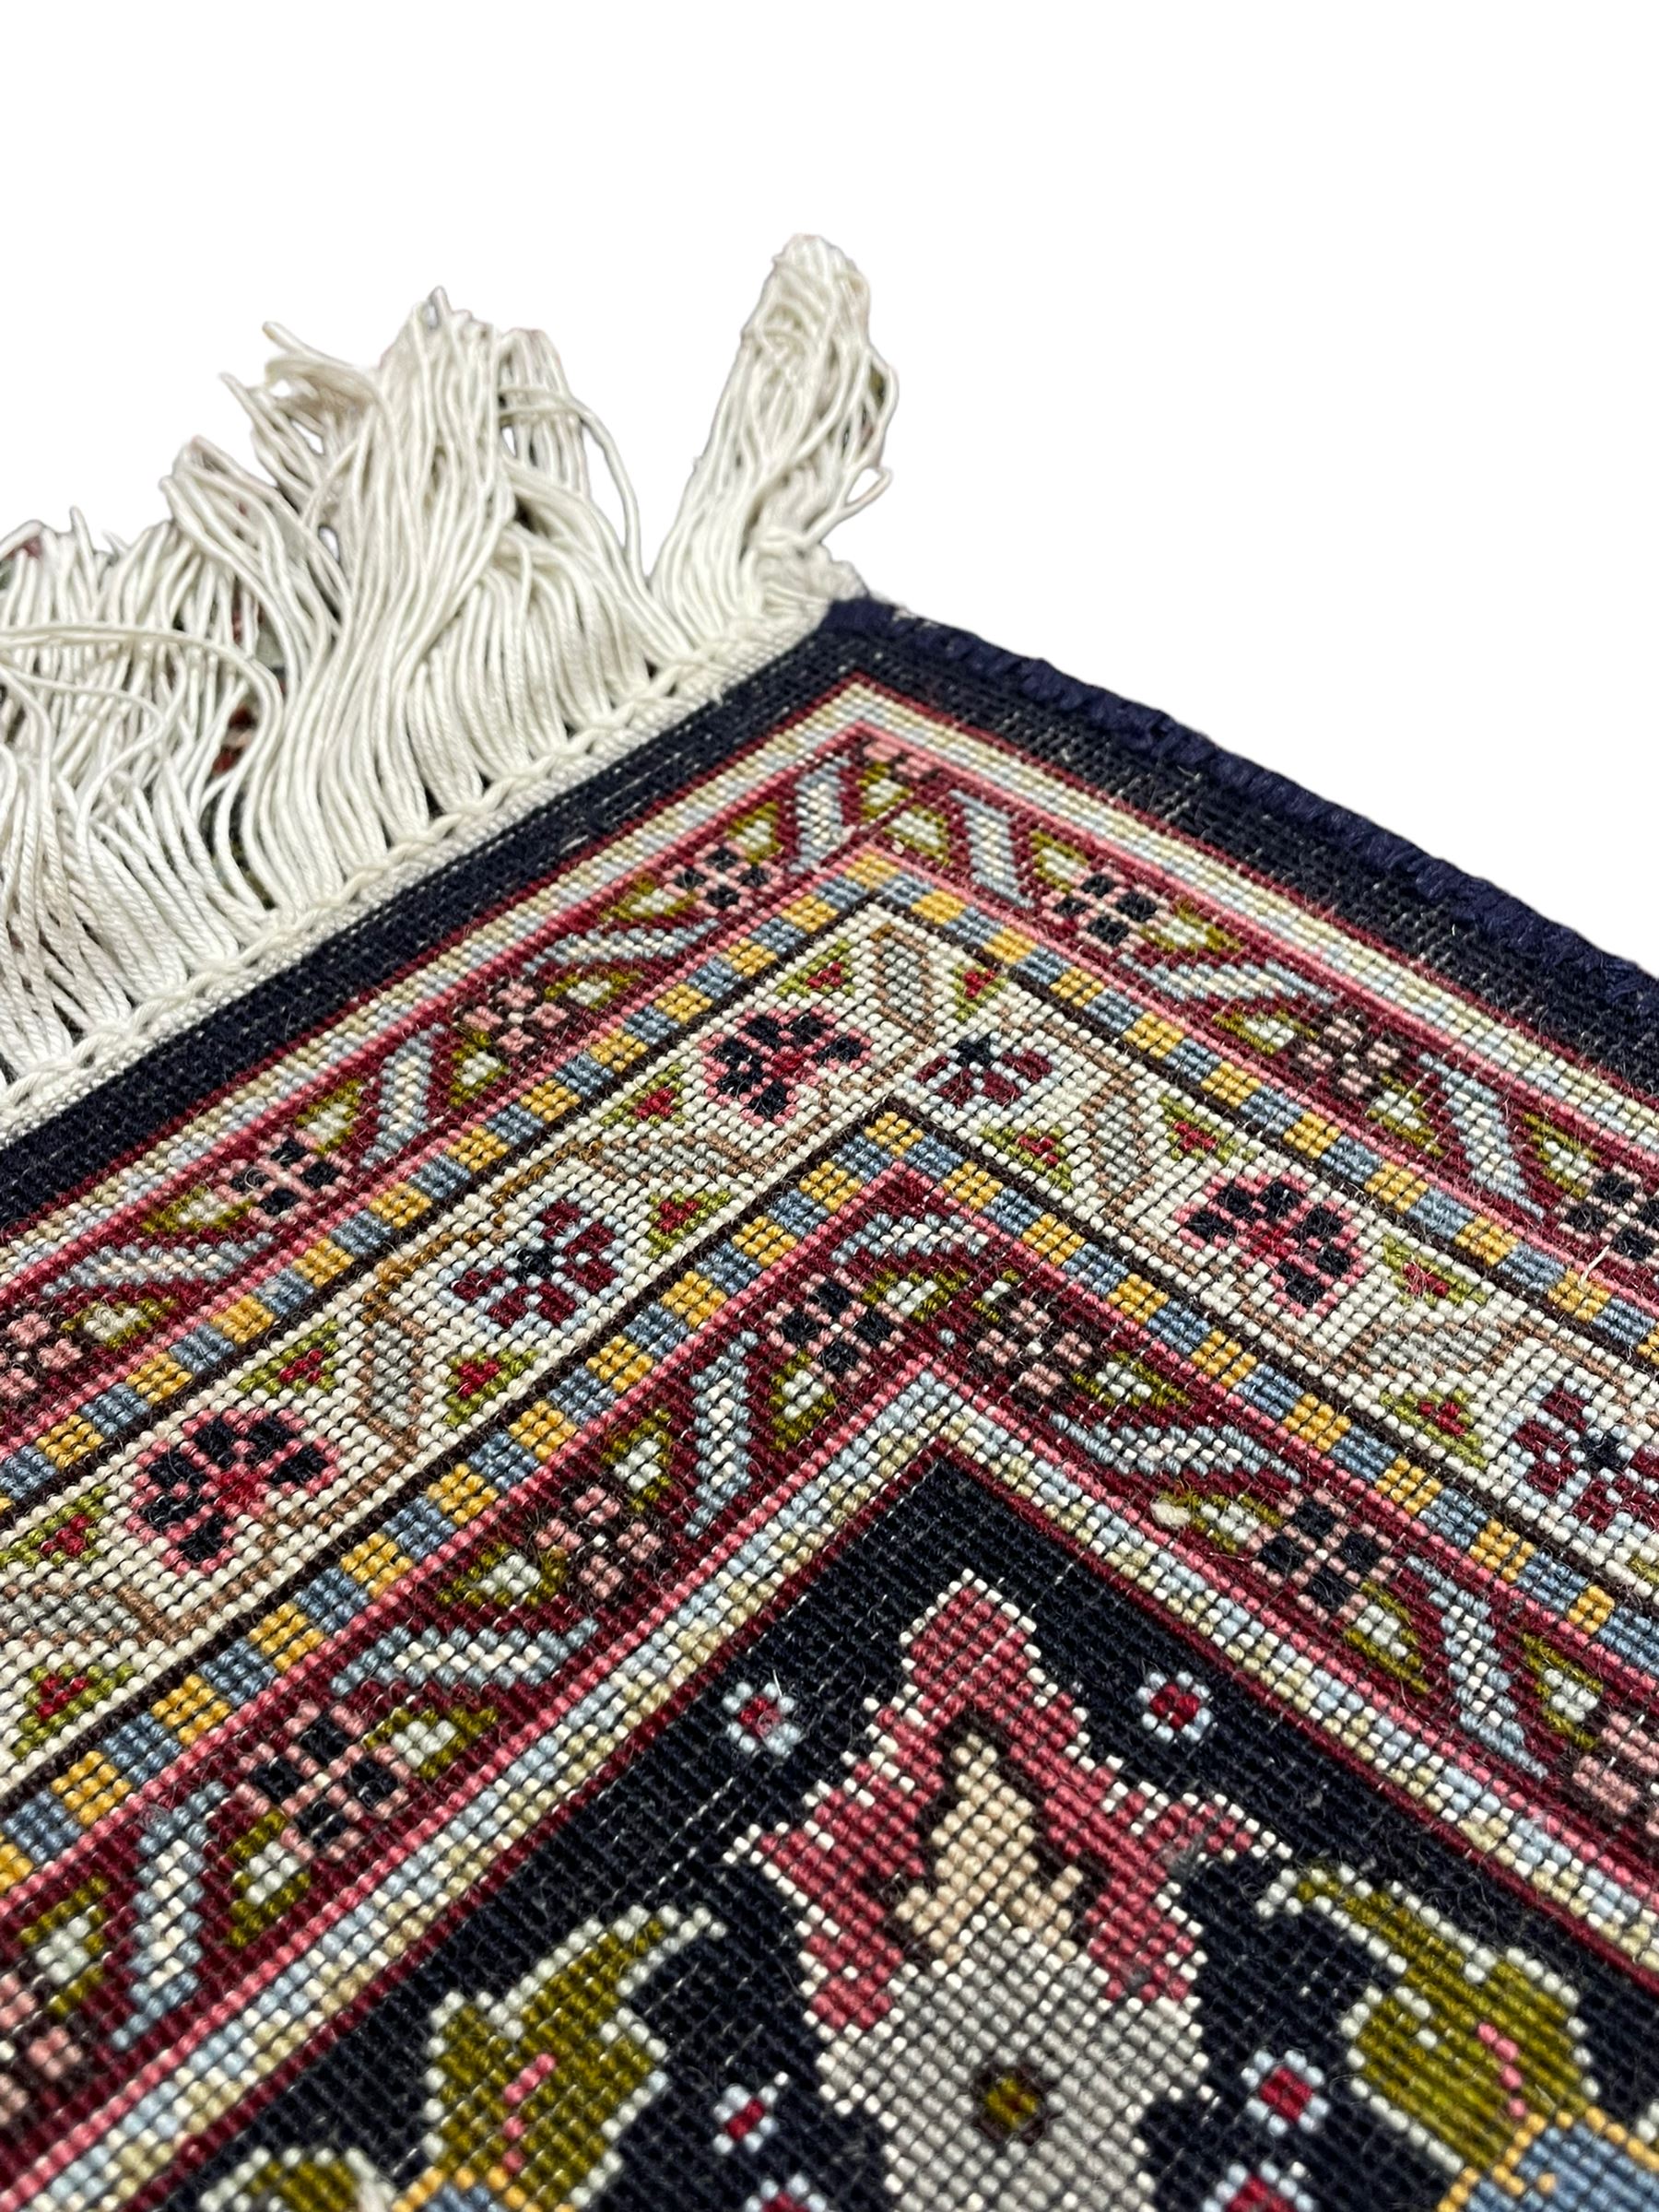 Fine Persian Tabriz rug - Image 7 of 8